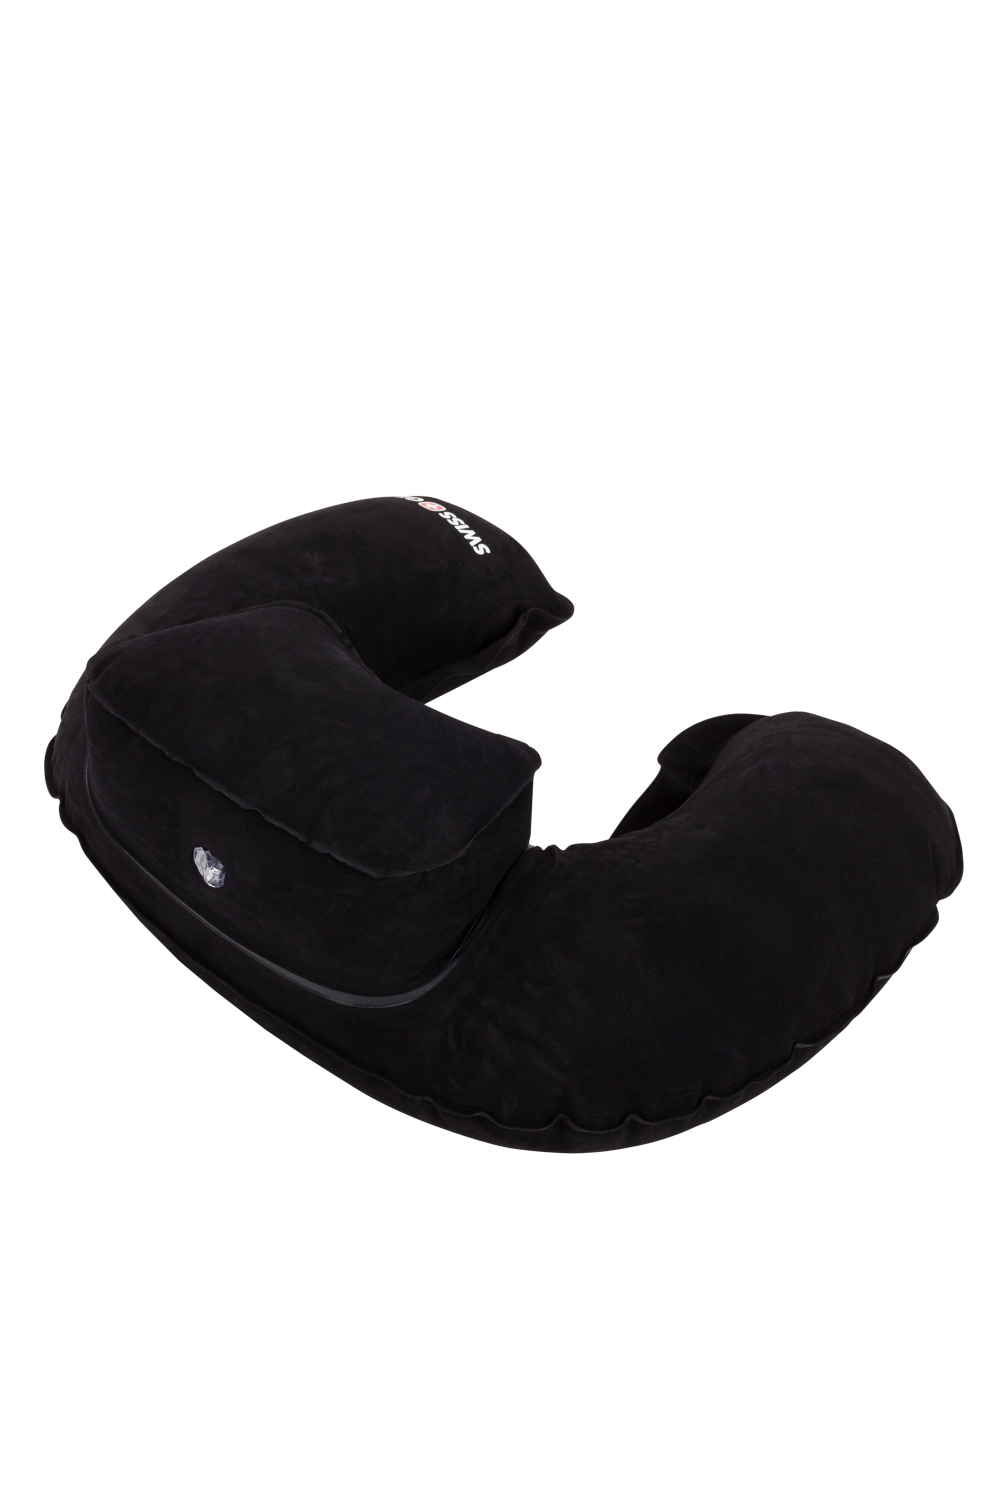 swiss gear inflatable neck pillow